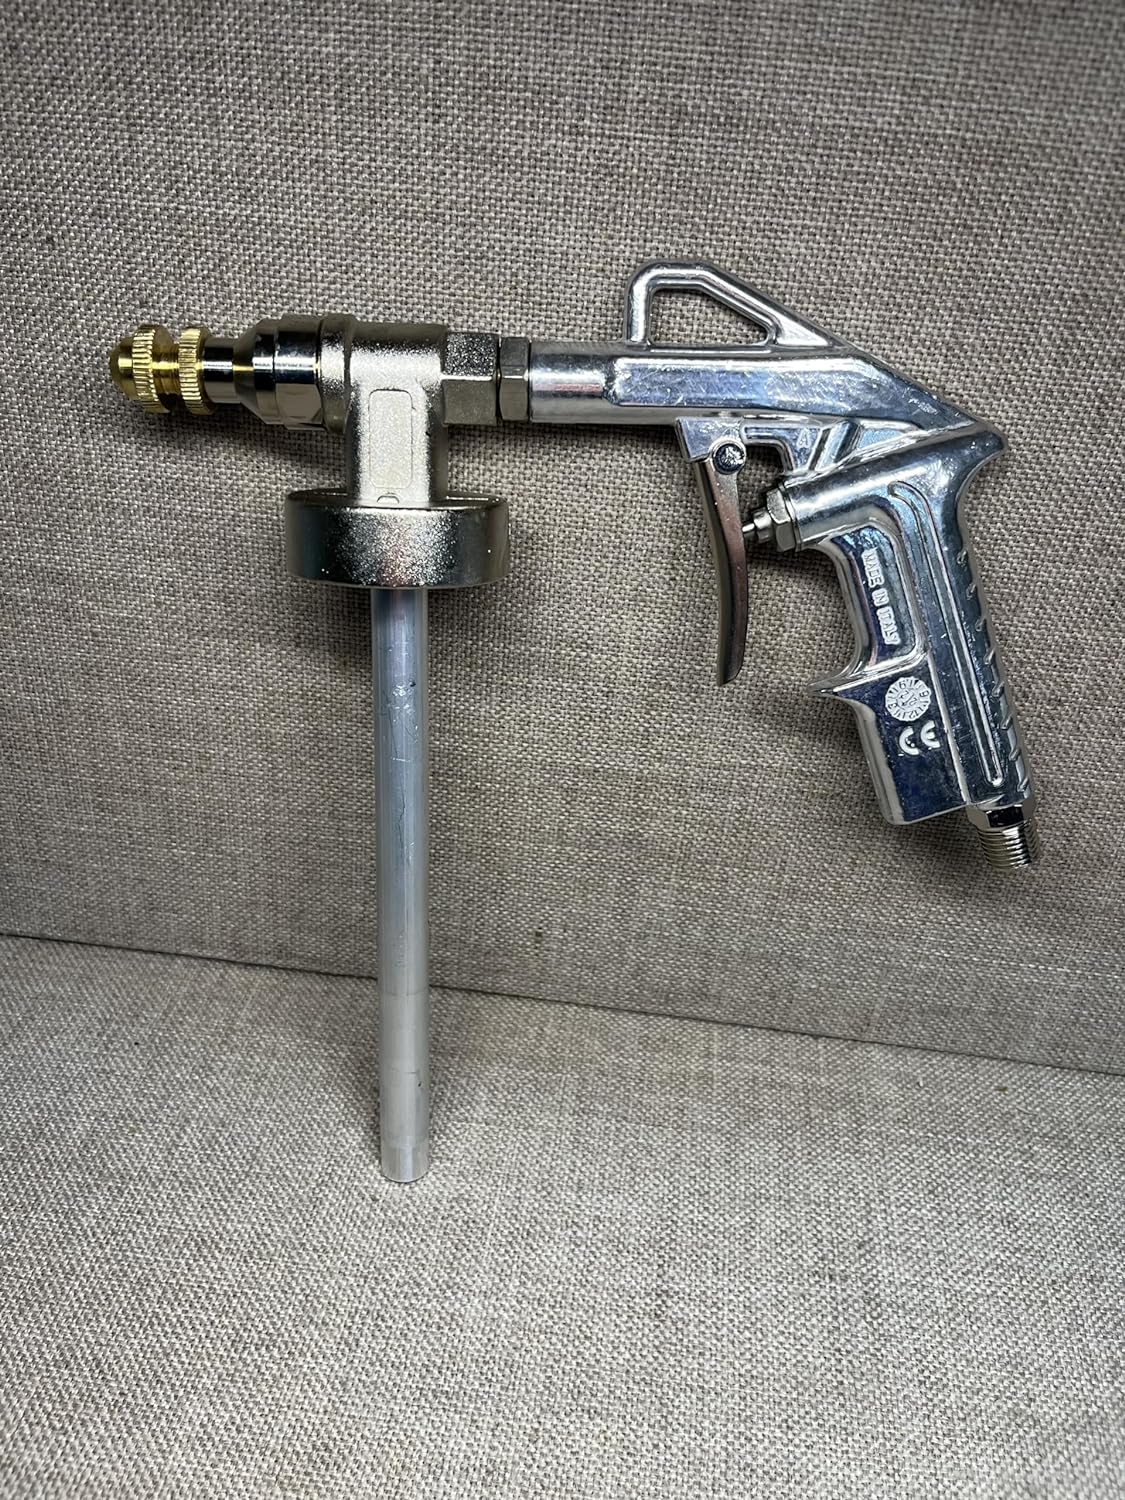 Pro Undercoating Gun Kit with Gallon PB Blaster, Spray Gun Light, Spray Undercoating Gun, 2 Wands, 3 Quart Bottles, and 50 Rust Plugs